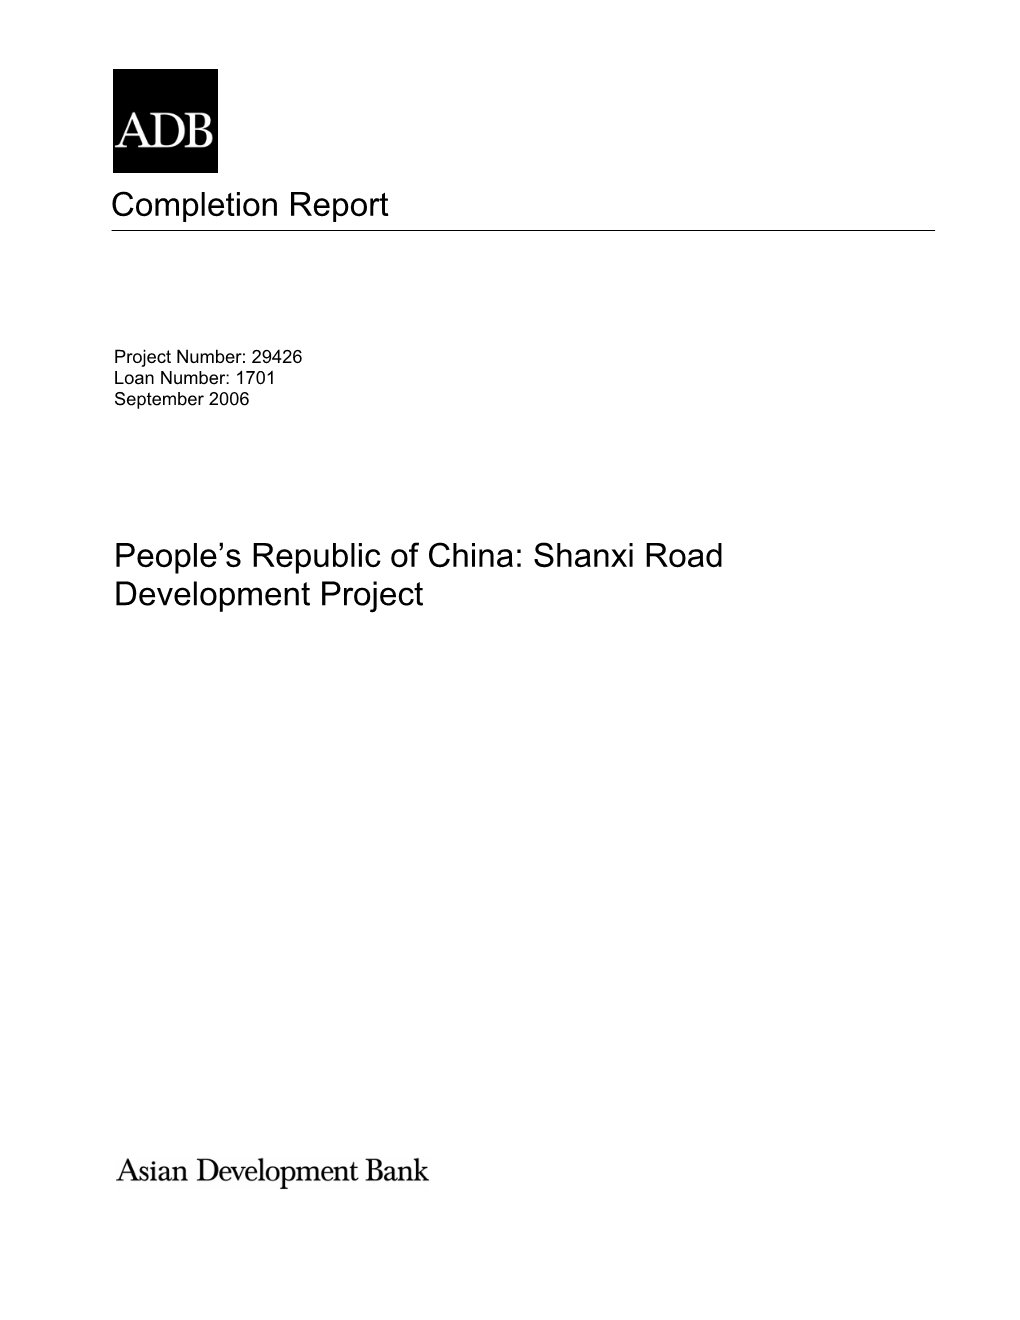 Shanxi Road Development Project